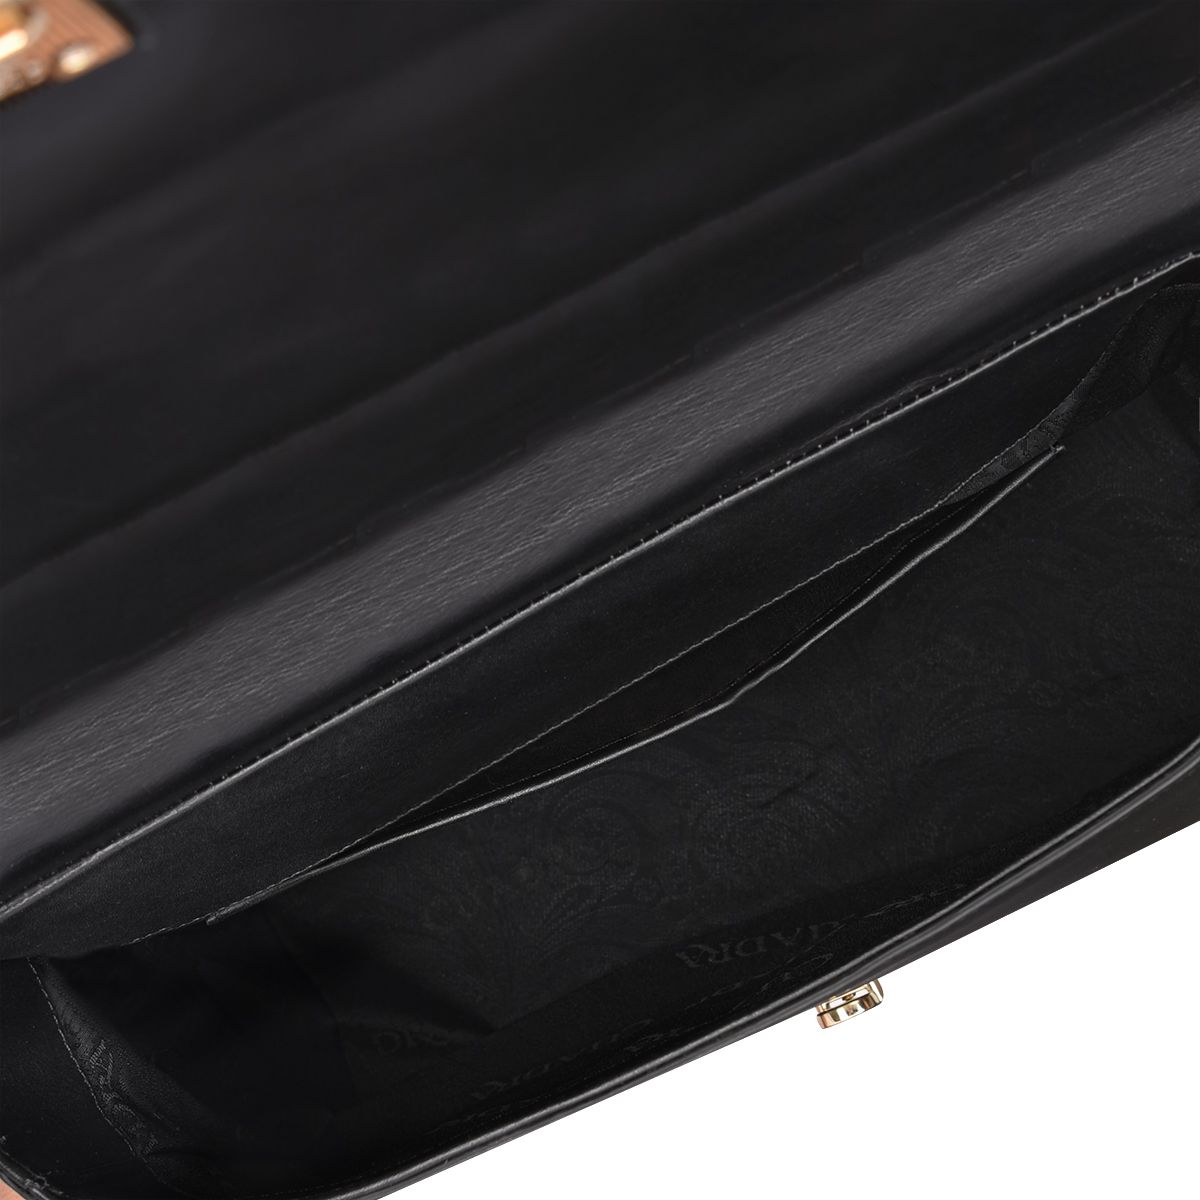 Black genuine exotic leather handbag with chain strap